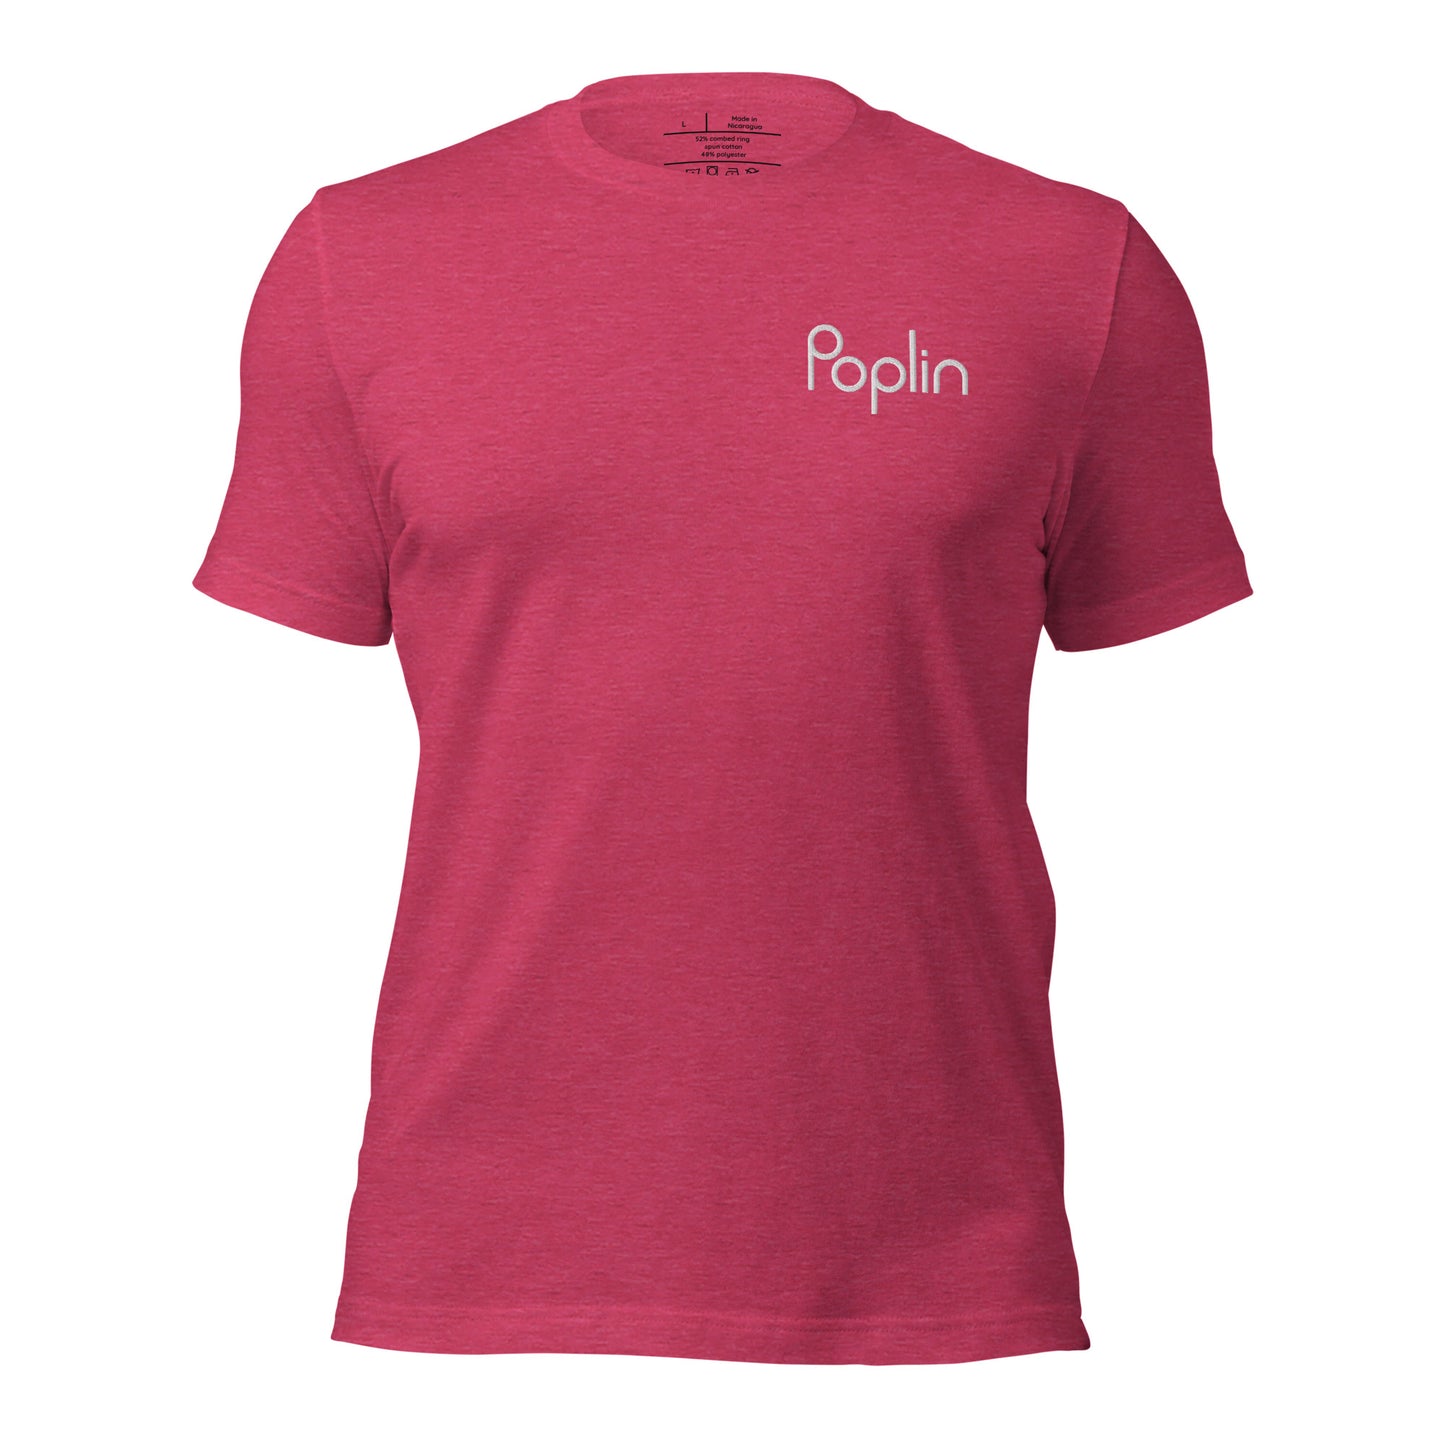 T-Shirt (Unisex) - Pink